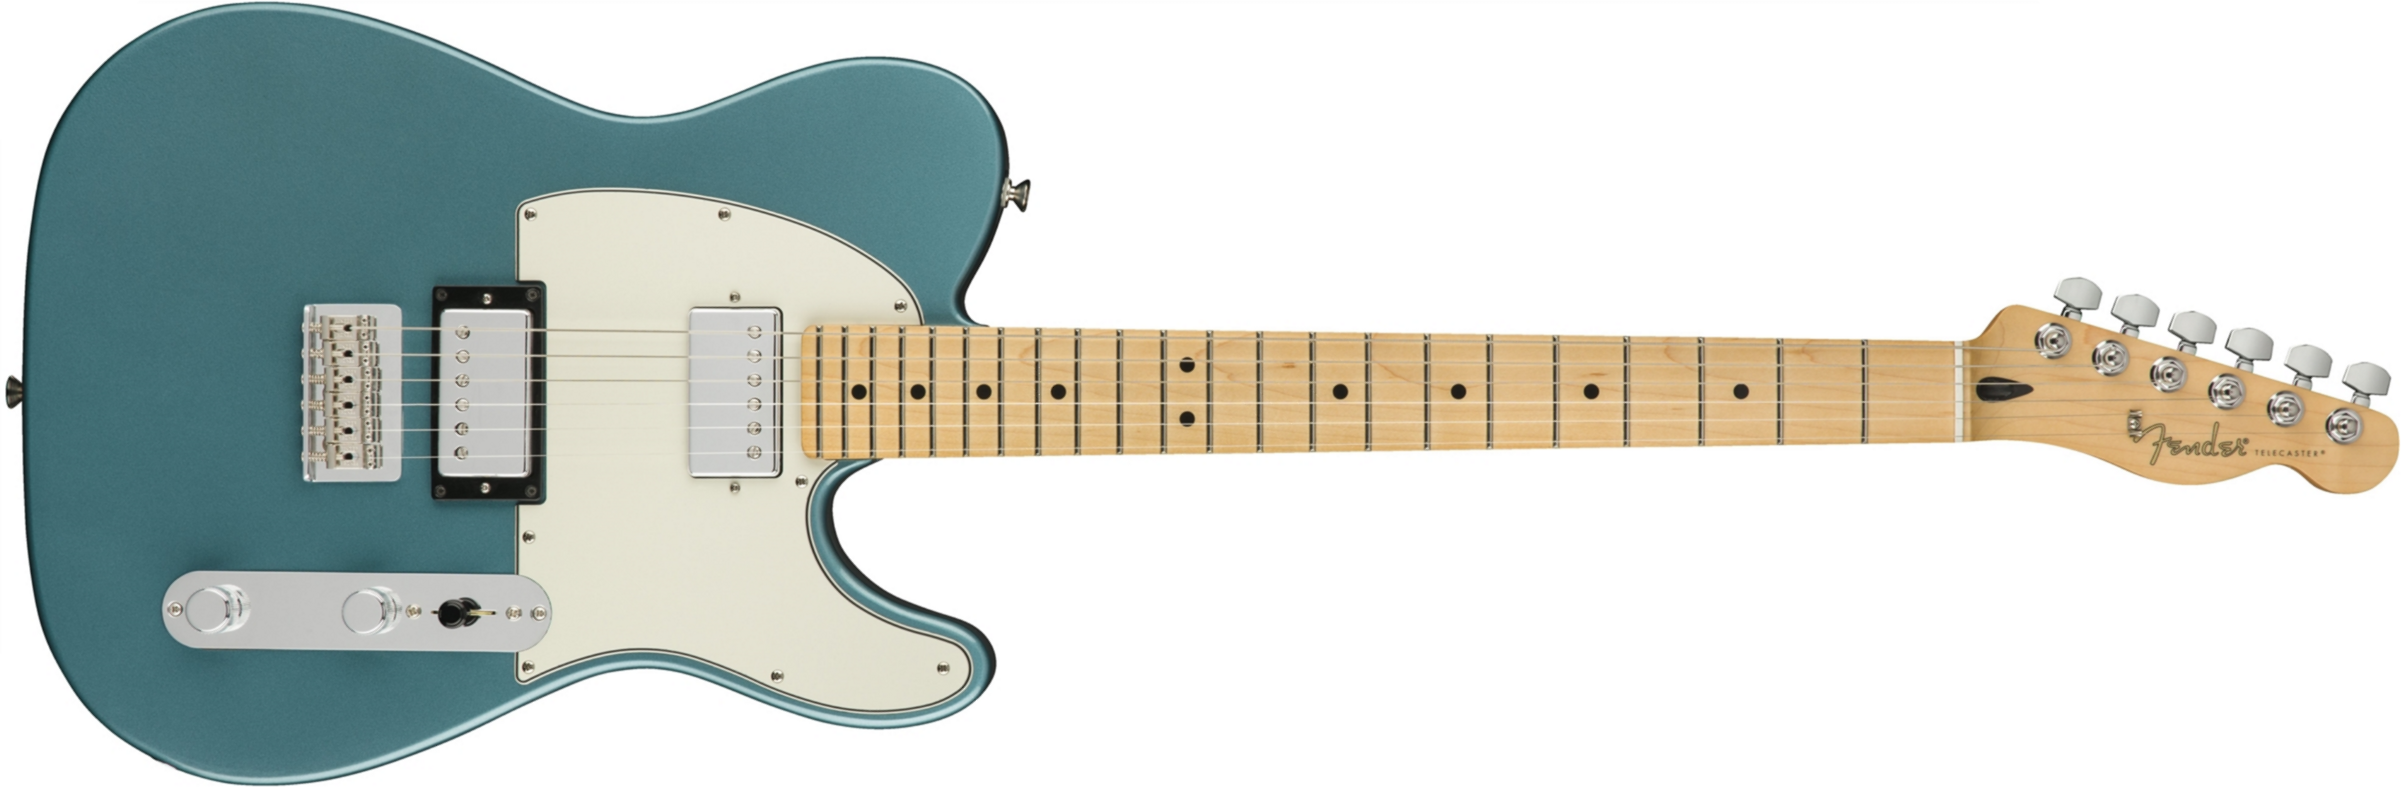 Fender Tele Player Mex Hh Mn - Tidepool - Televorm elektrische gitaar - Main picture